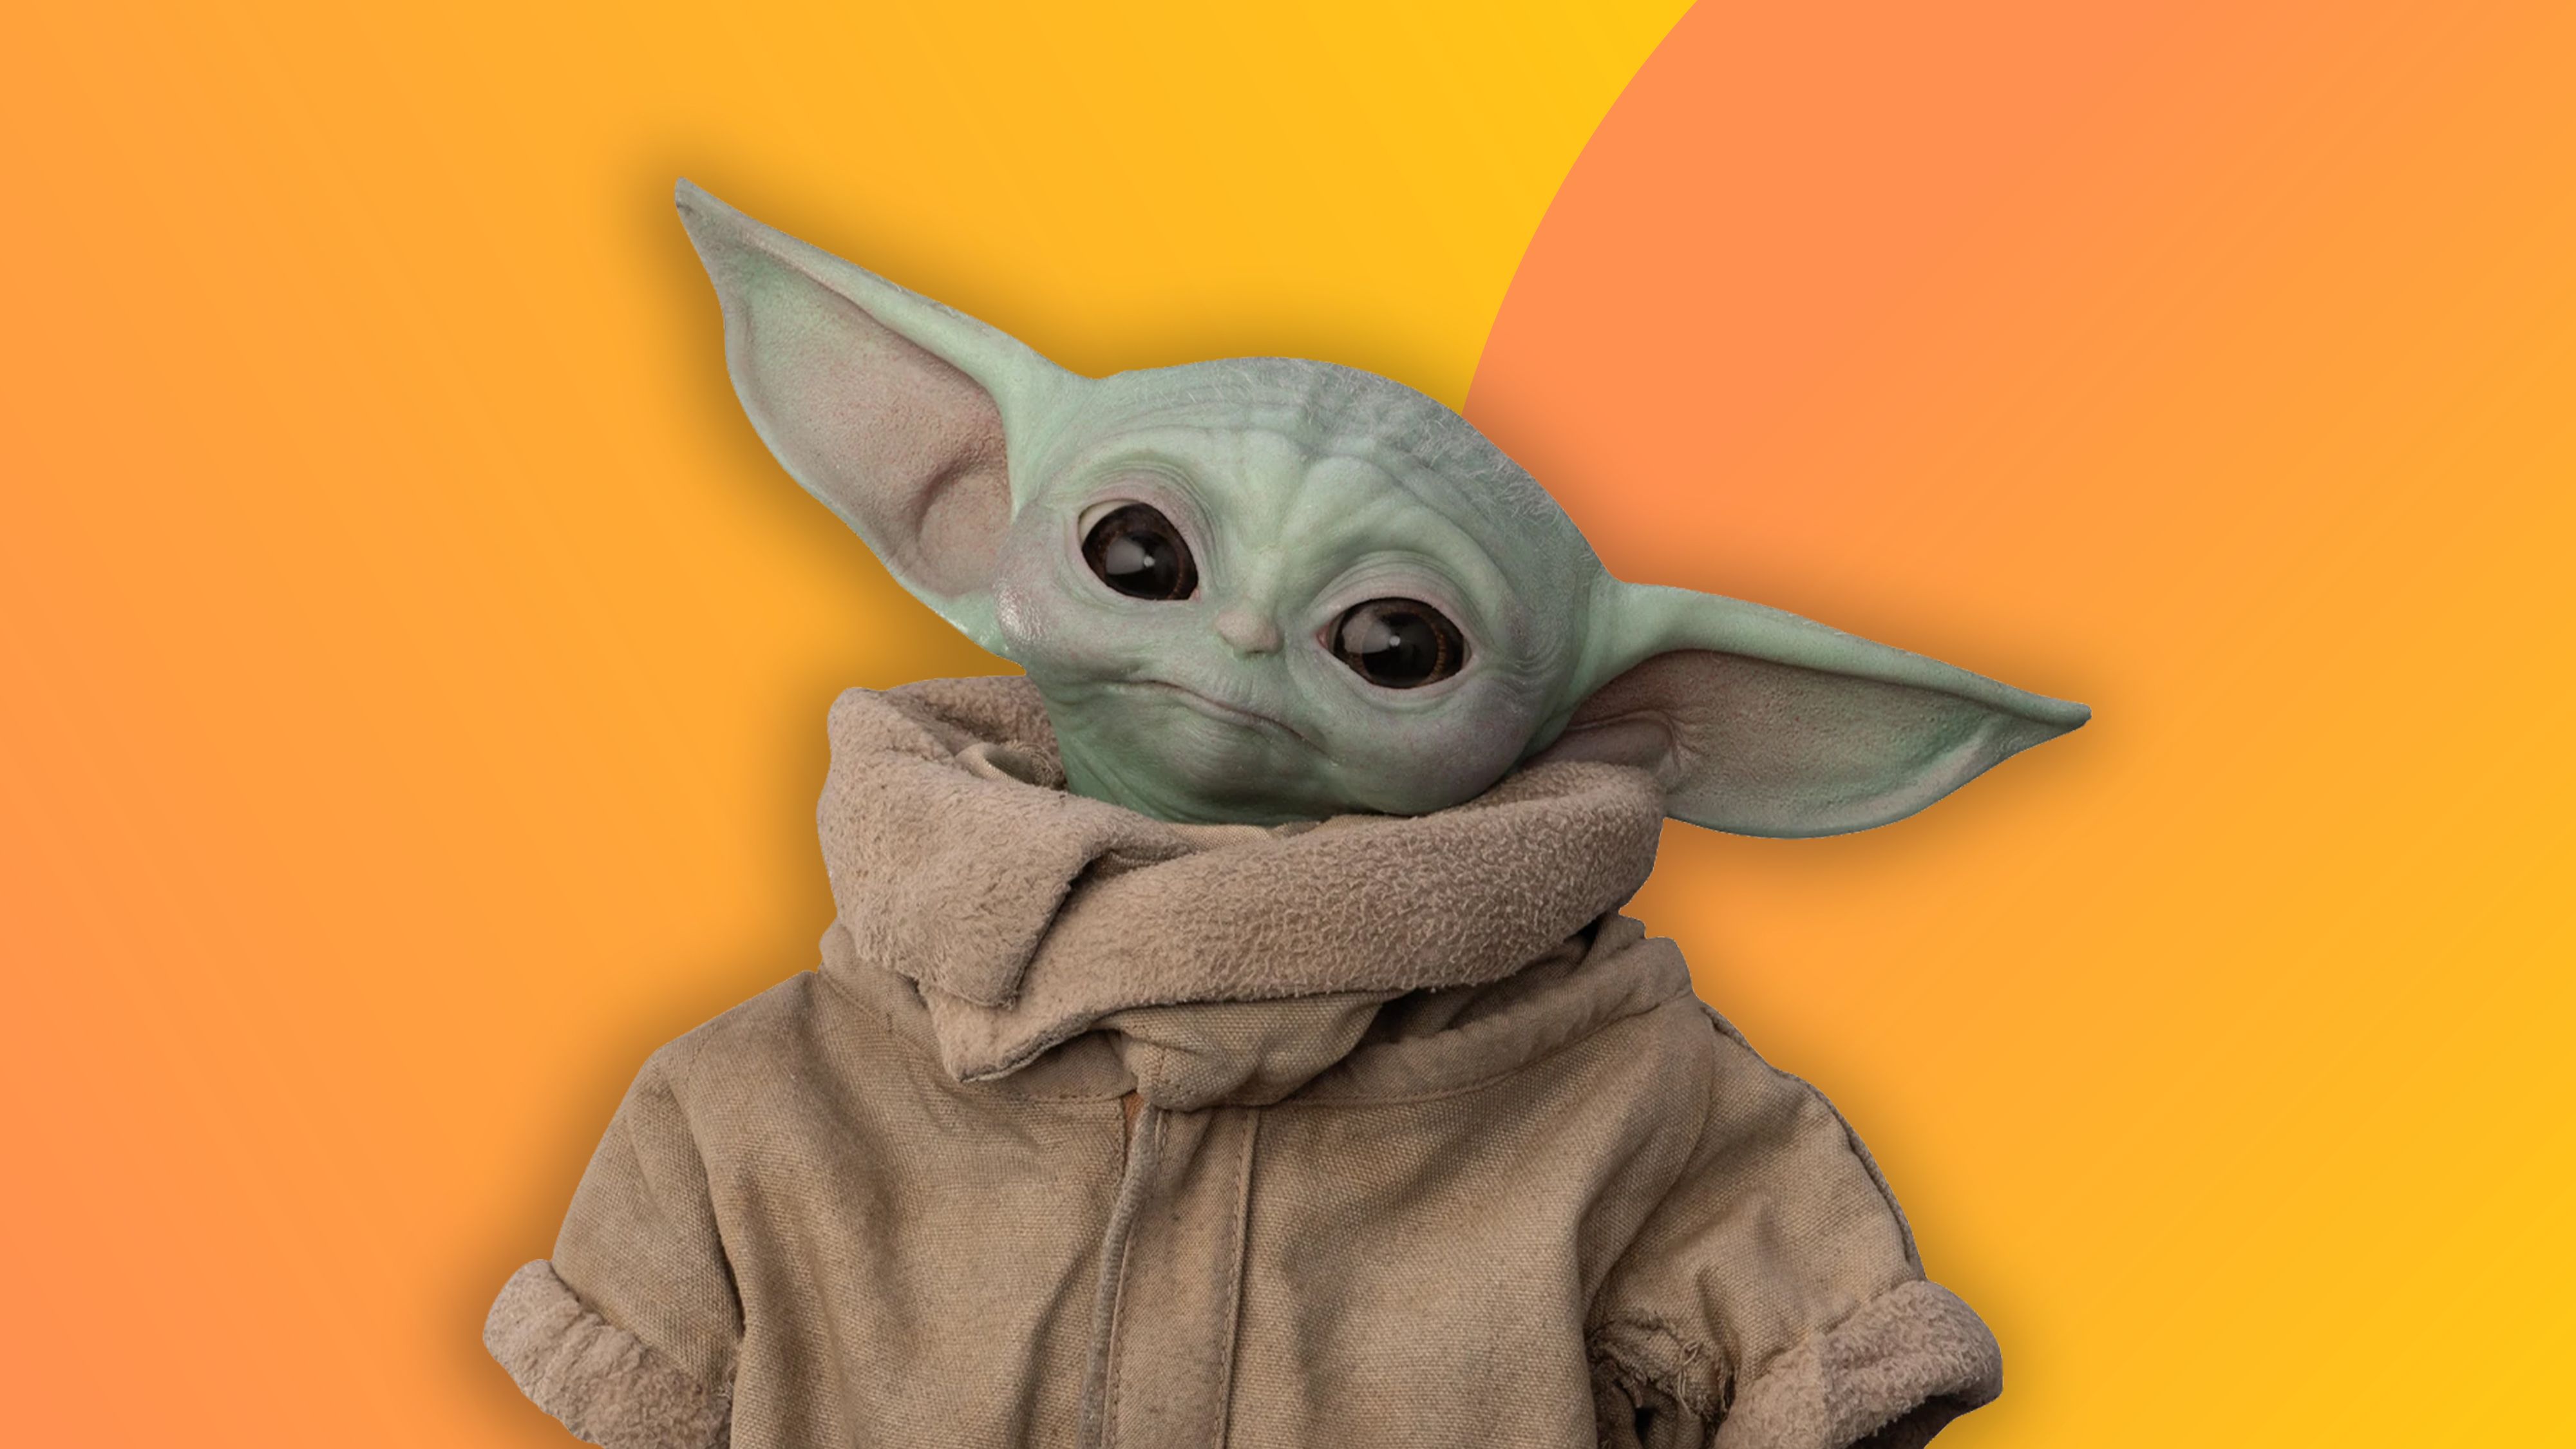 A baby yoda in an orange background - Baby Yoda